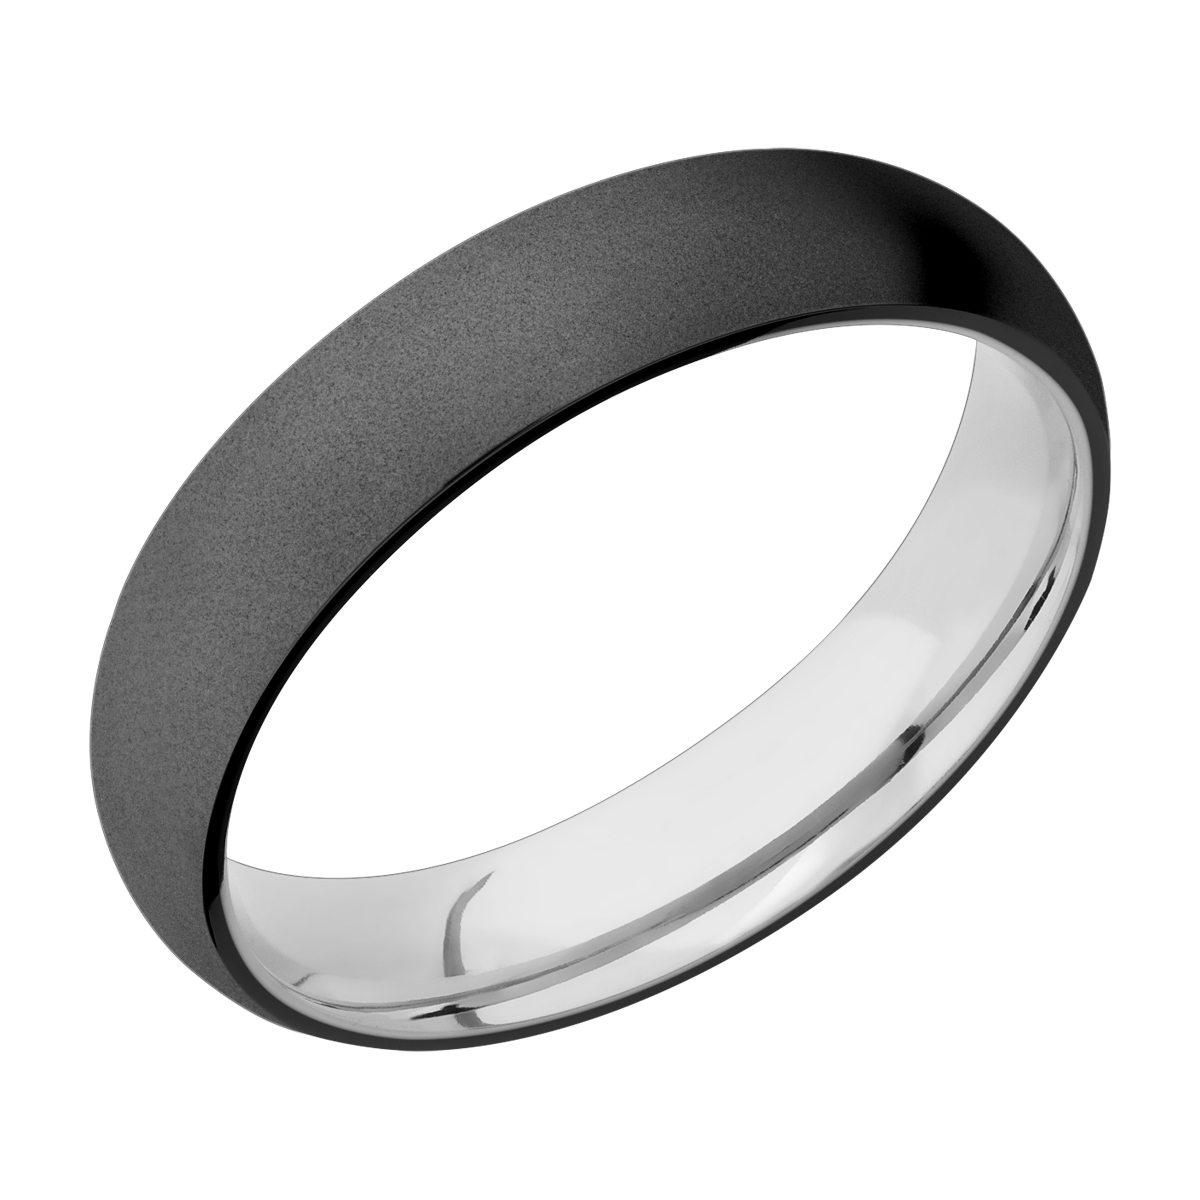 Lashbrook CCSLEEVEZ5D Zirconium and Cobalt Chrome Wedding Ring or Band